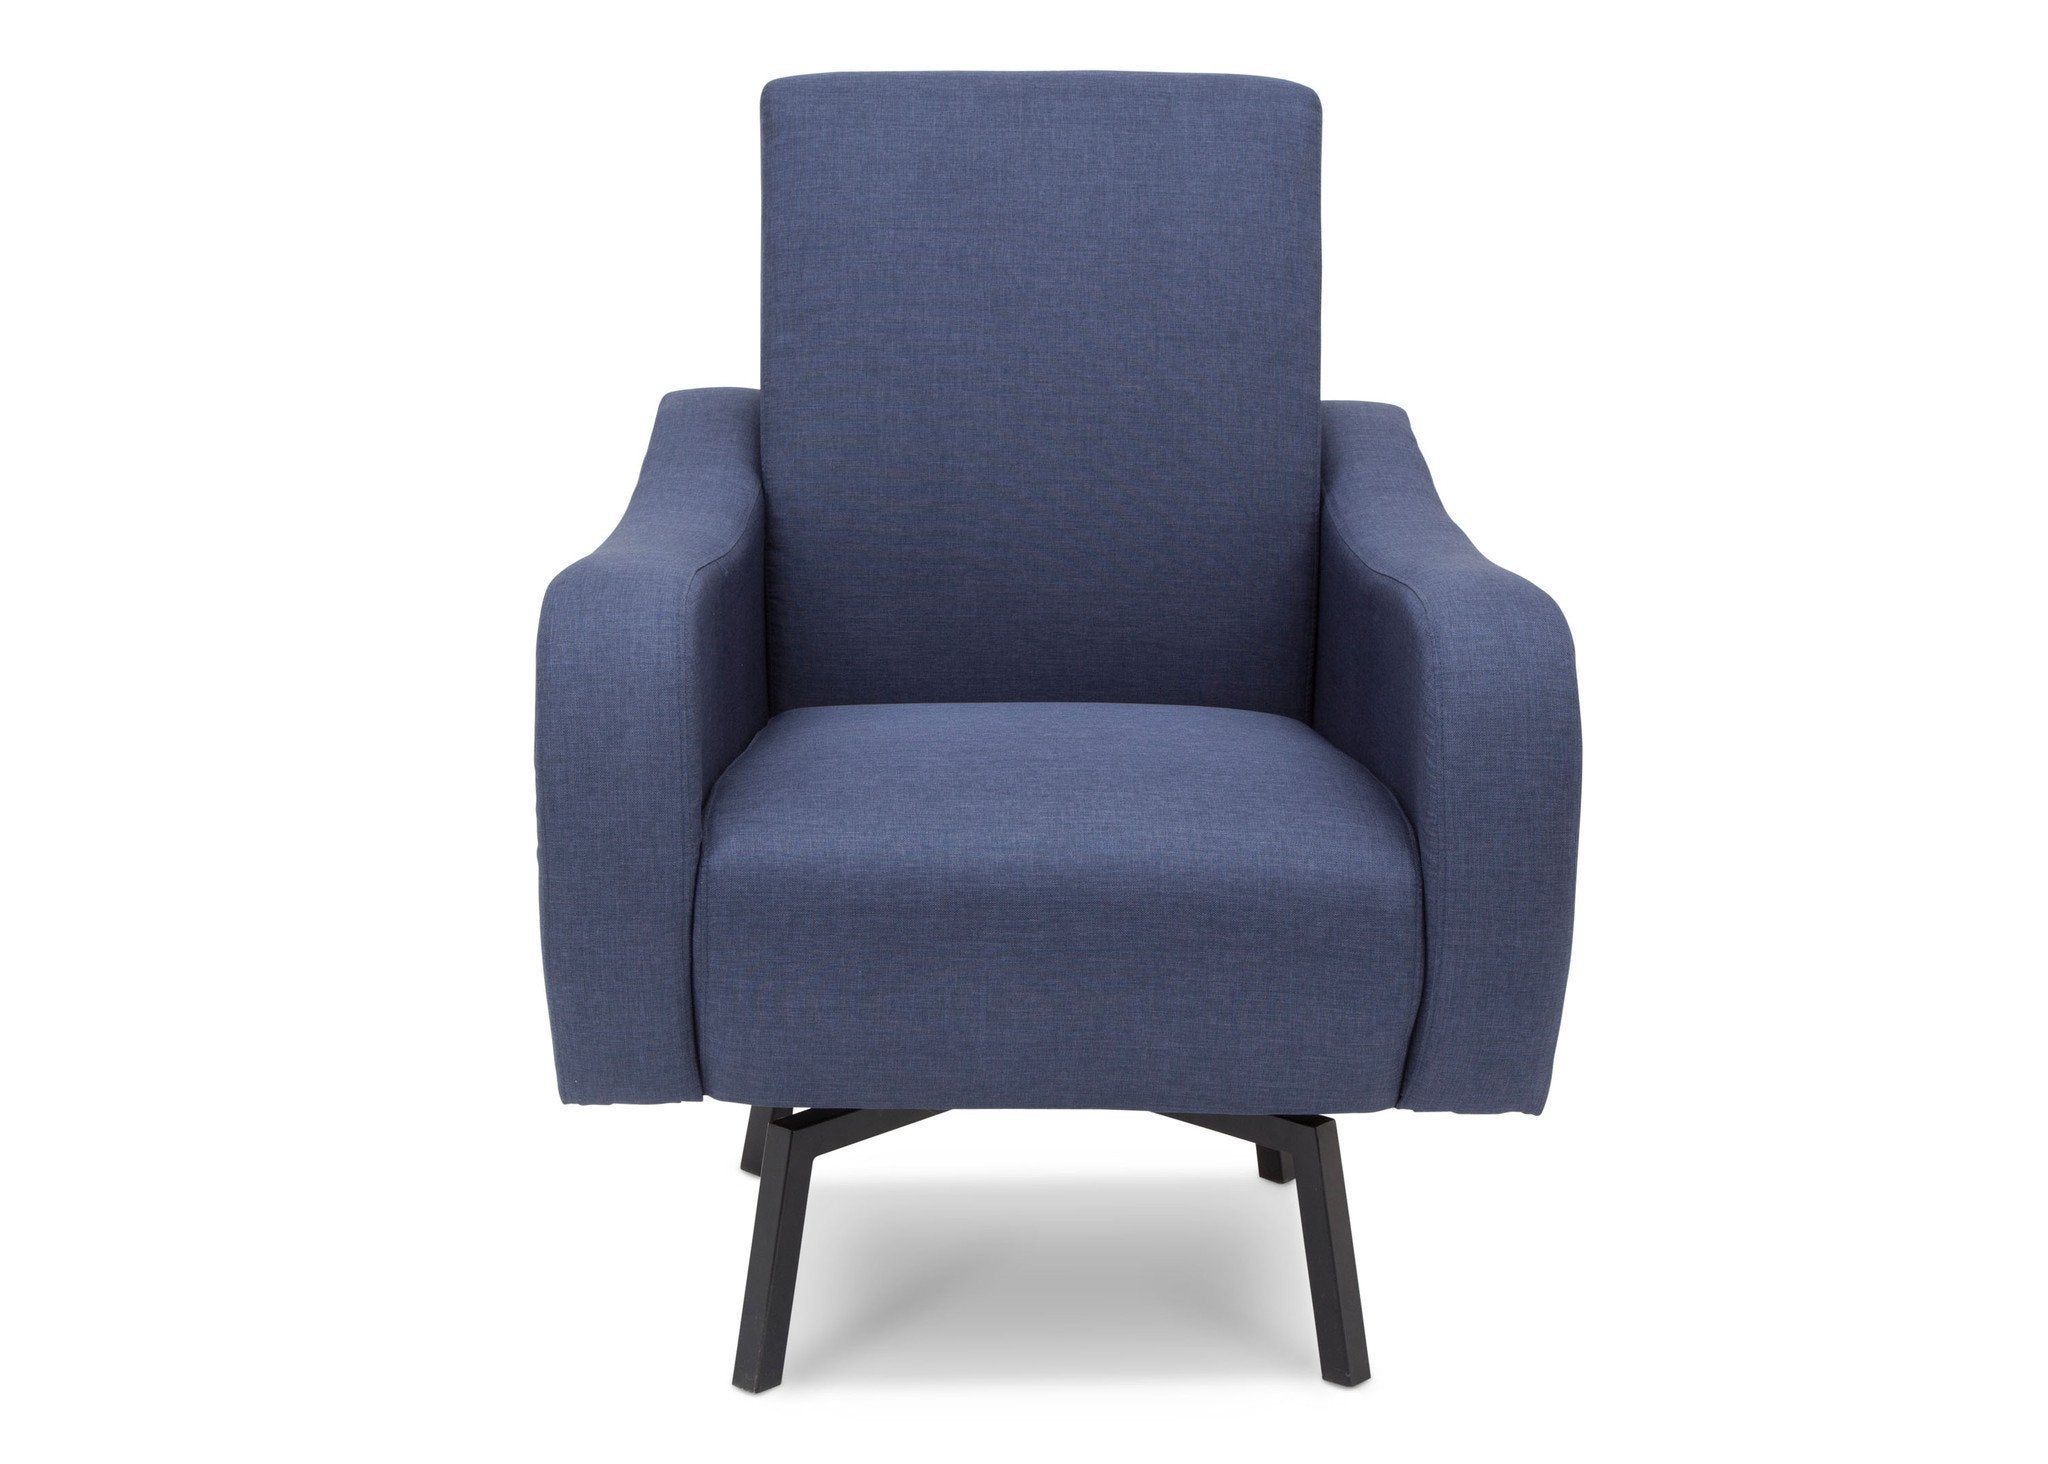 Delta Children Steel Blue (426) Lux Swivel Chair (51210) Front View b1b